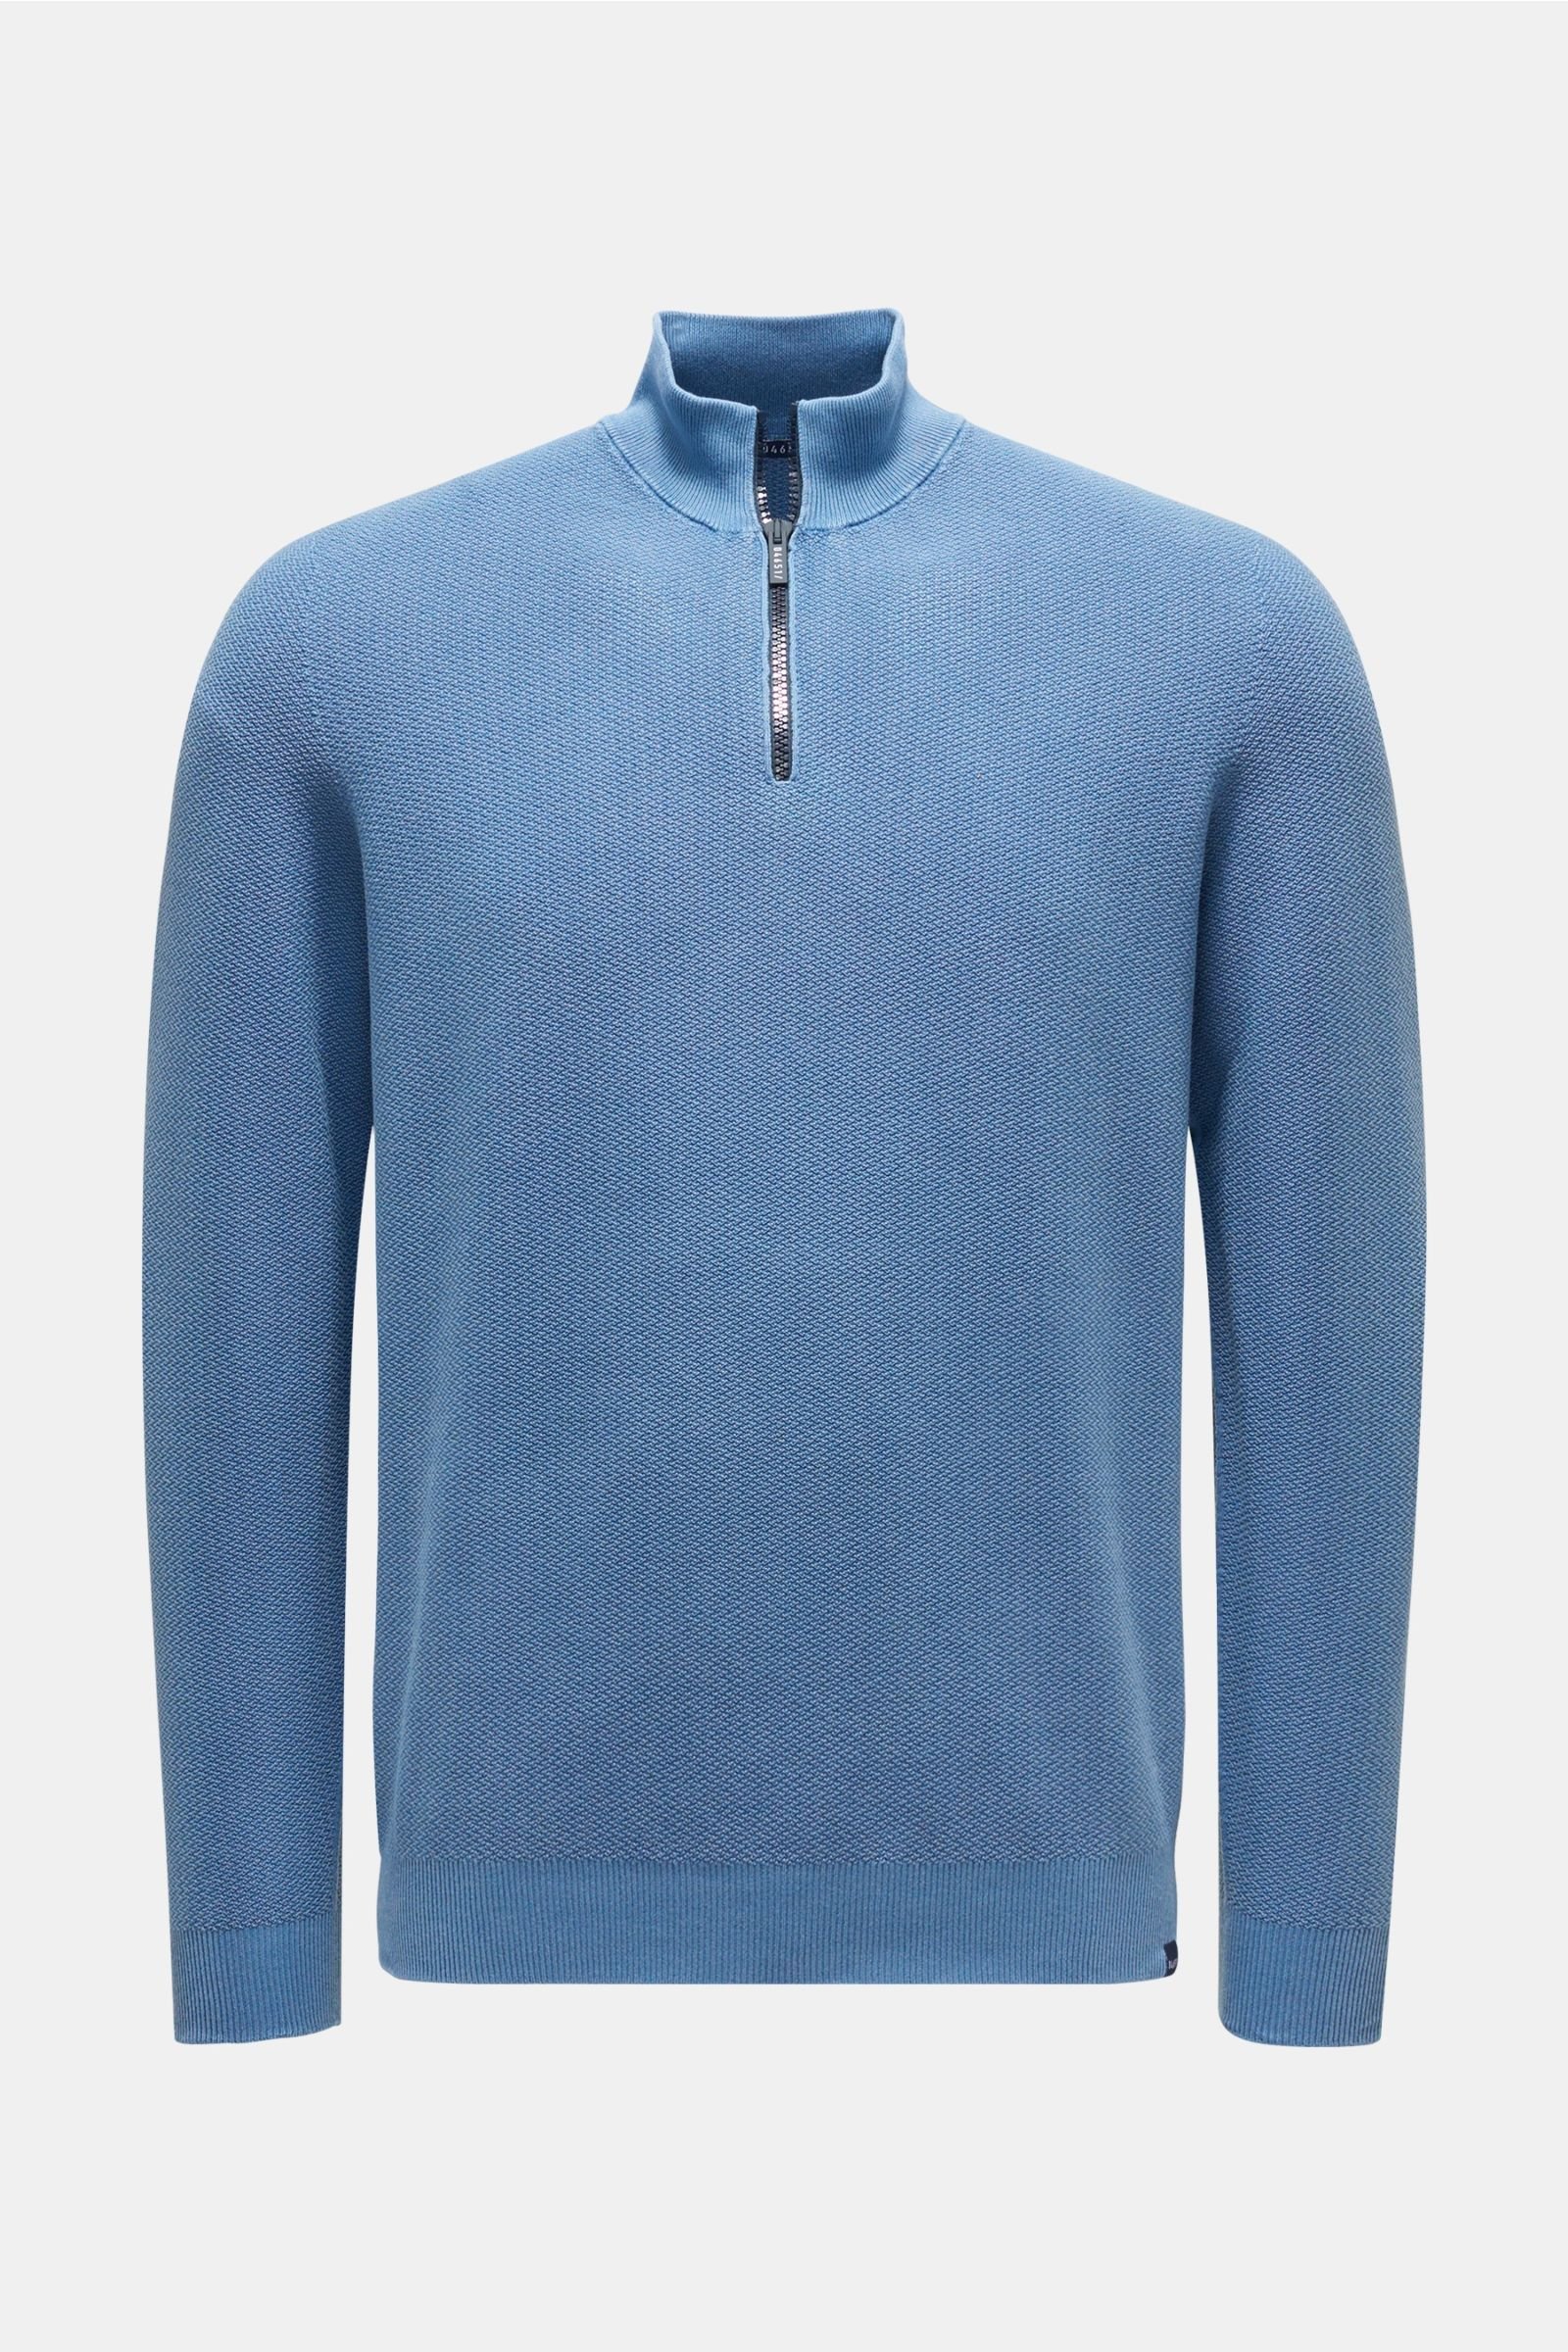 Half-zip jumper grey-blue